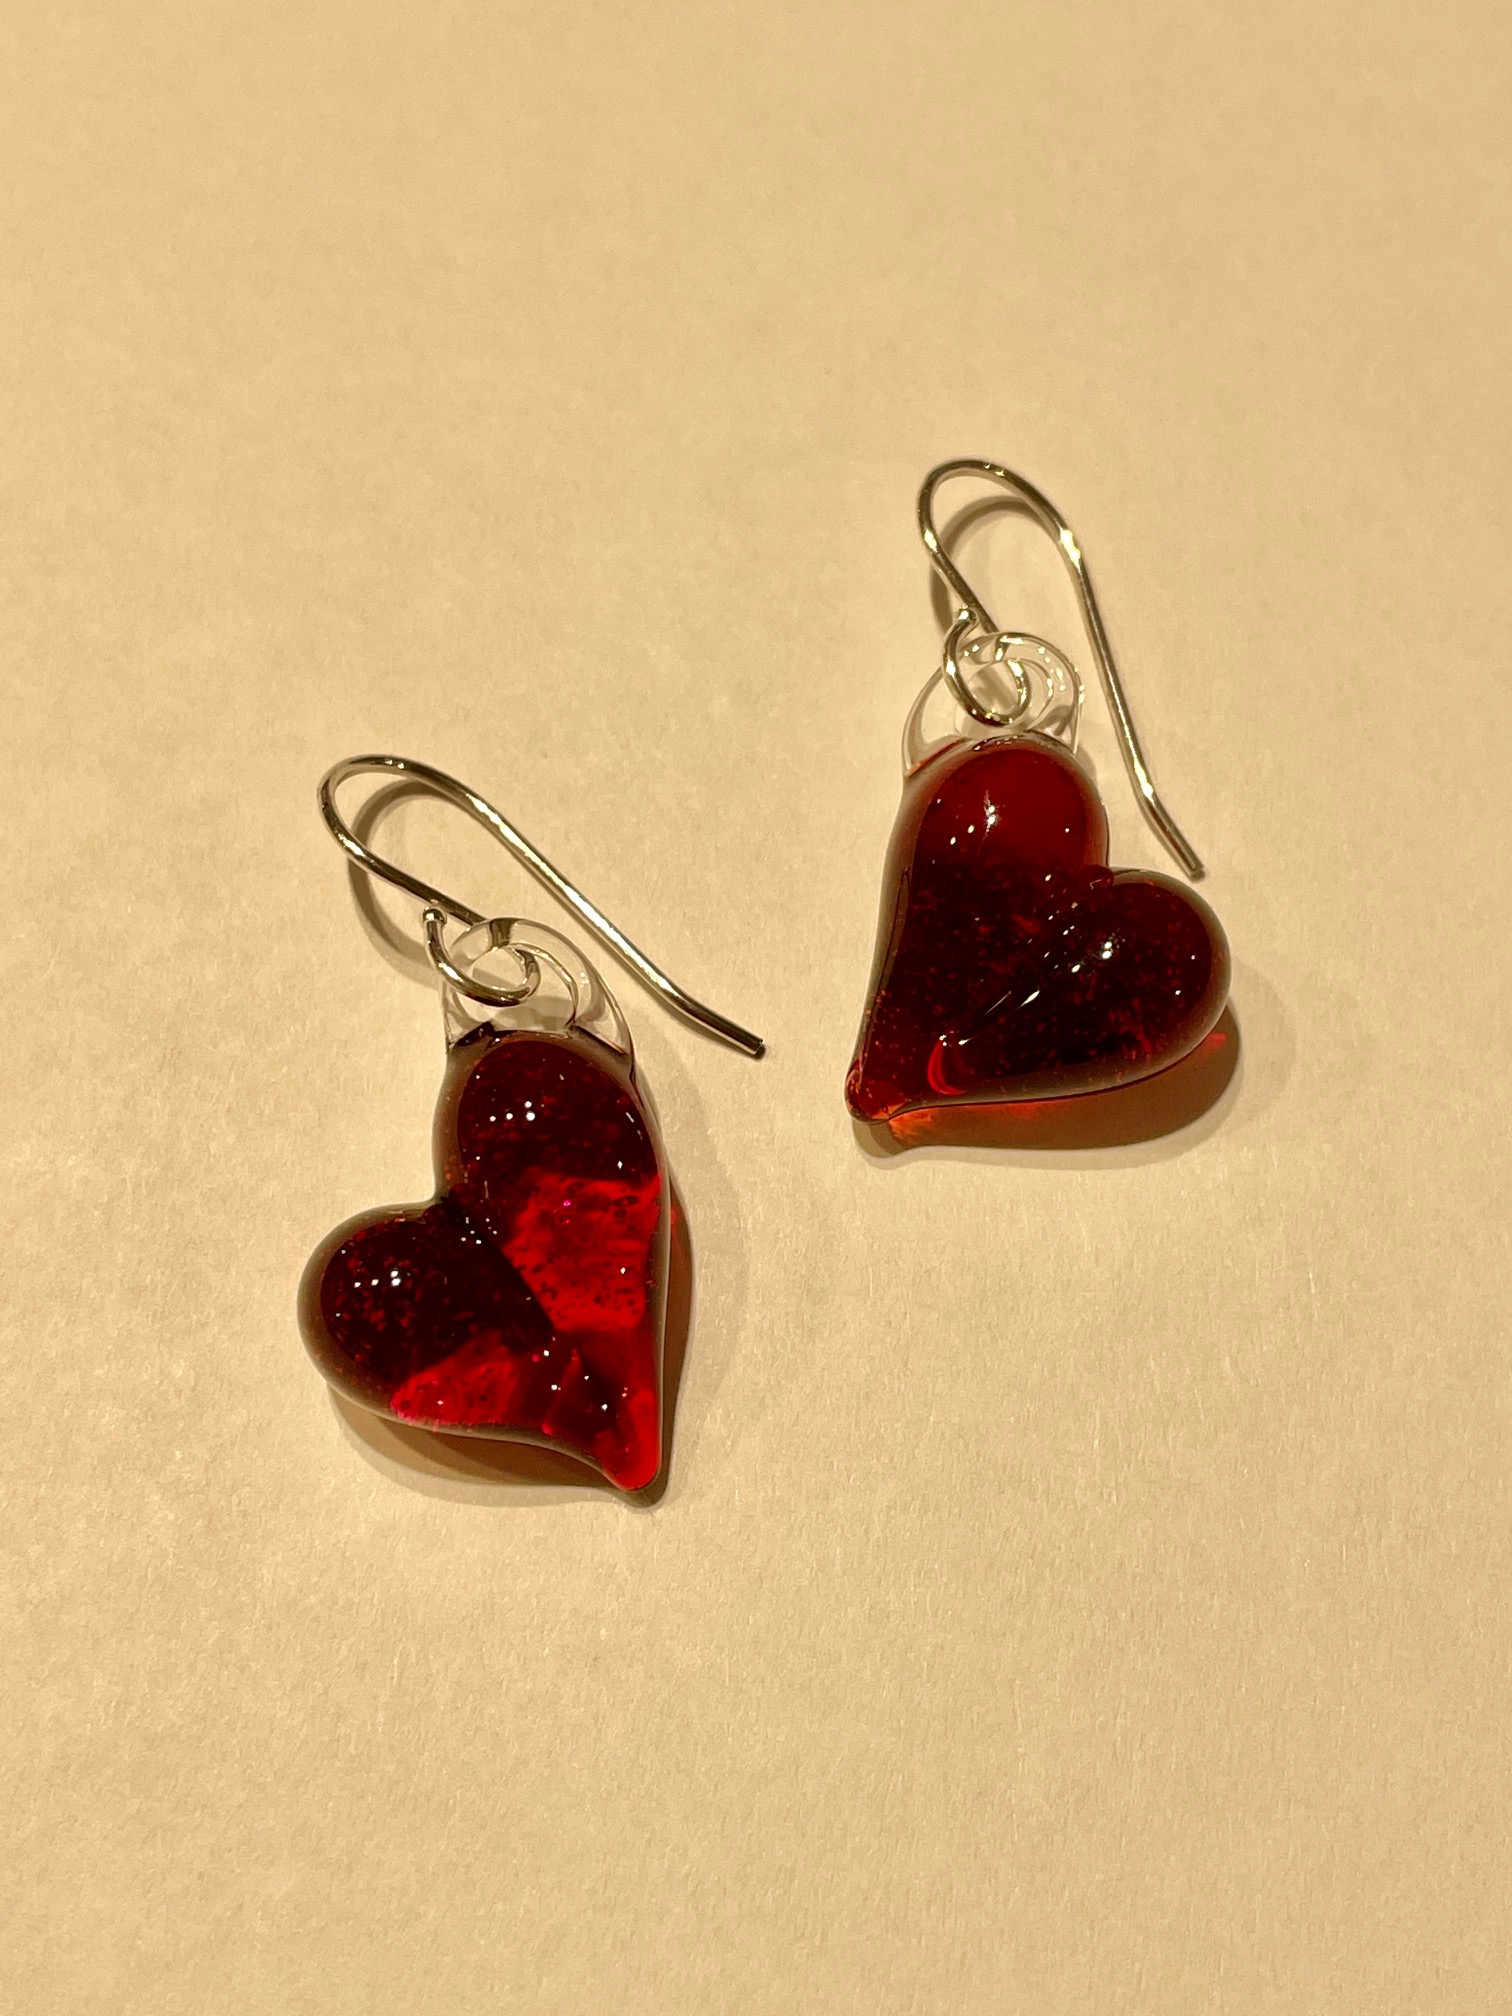 Glass Ruby Heart Earrings on Sterling Wires